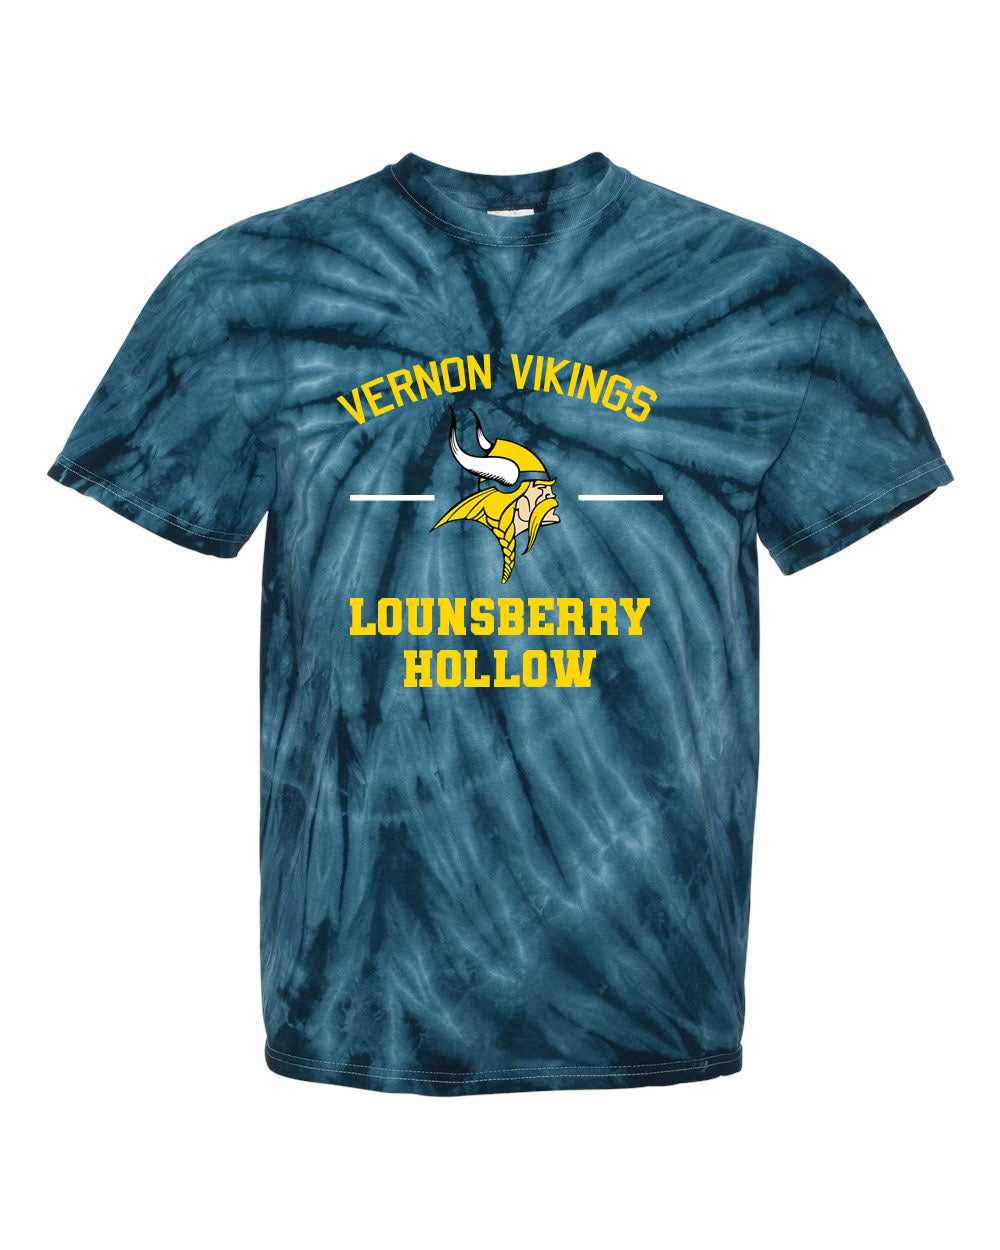 Lounsberry Hollow  Tie Dye t-shirt Design 2